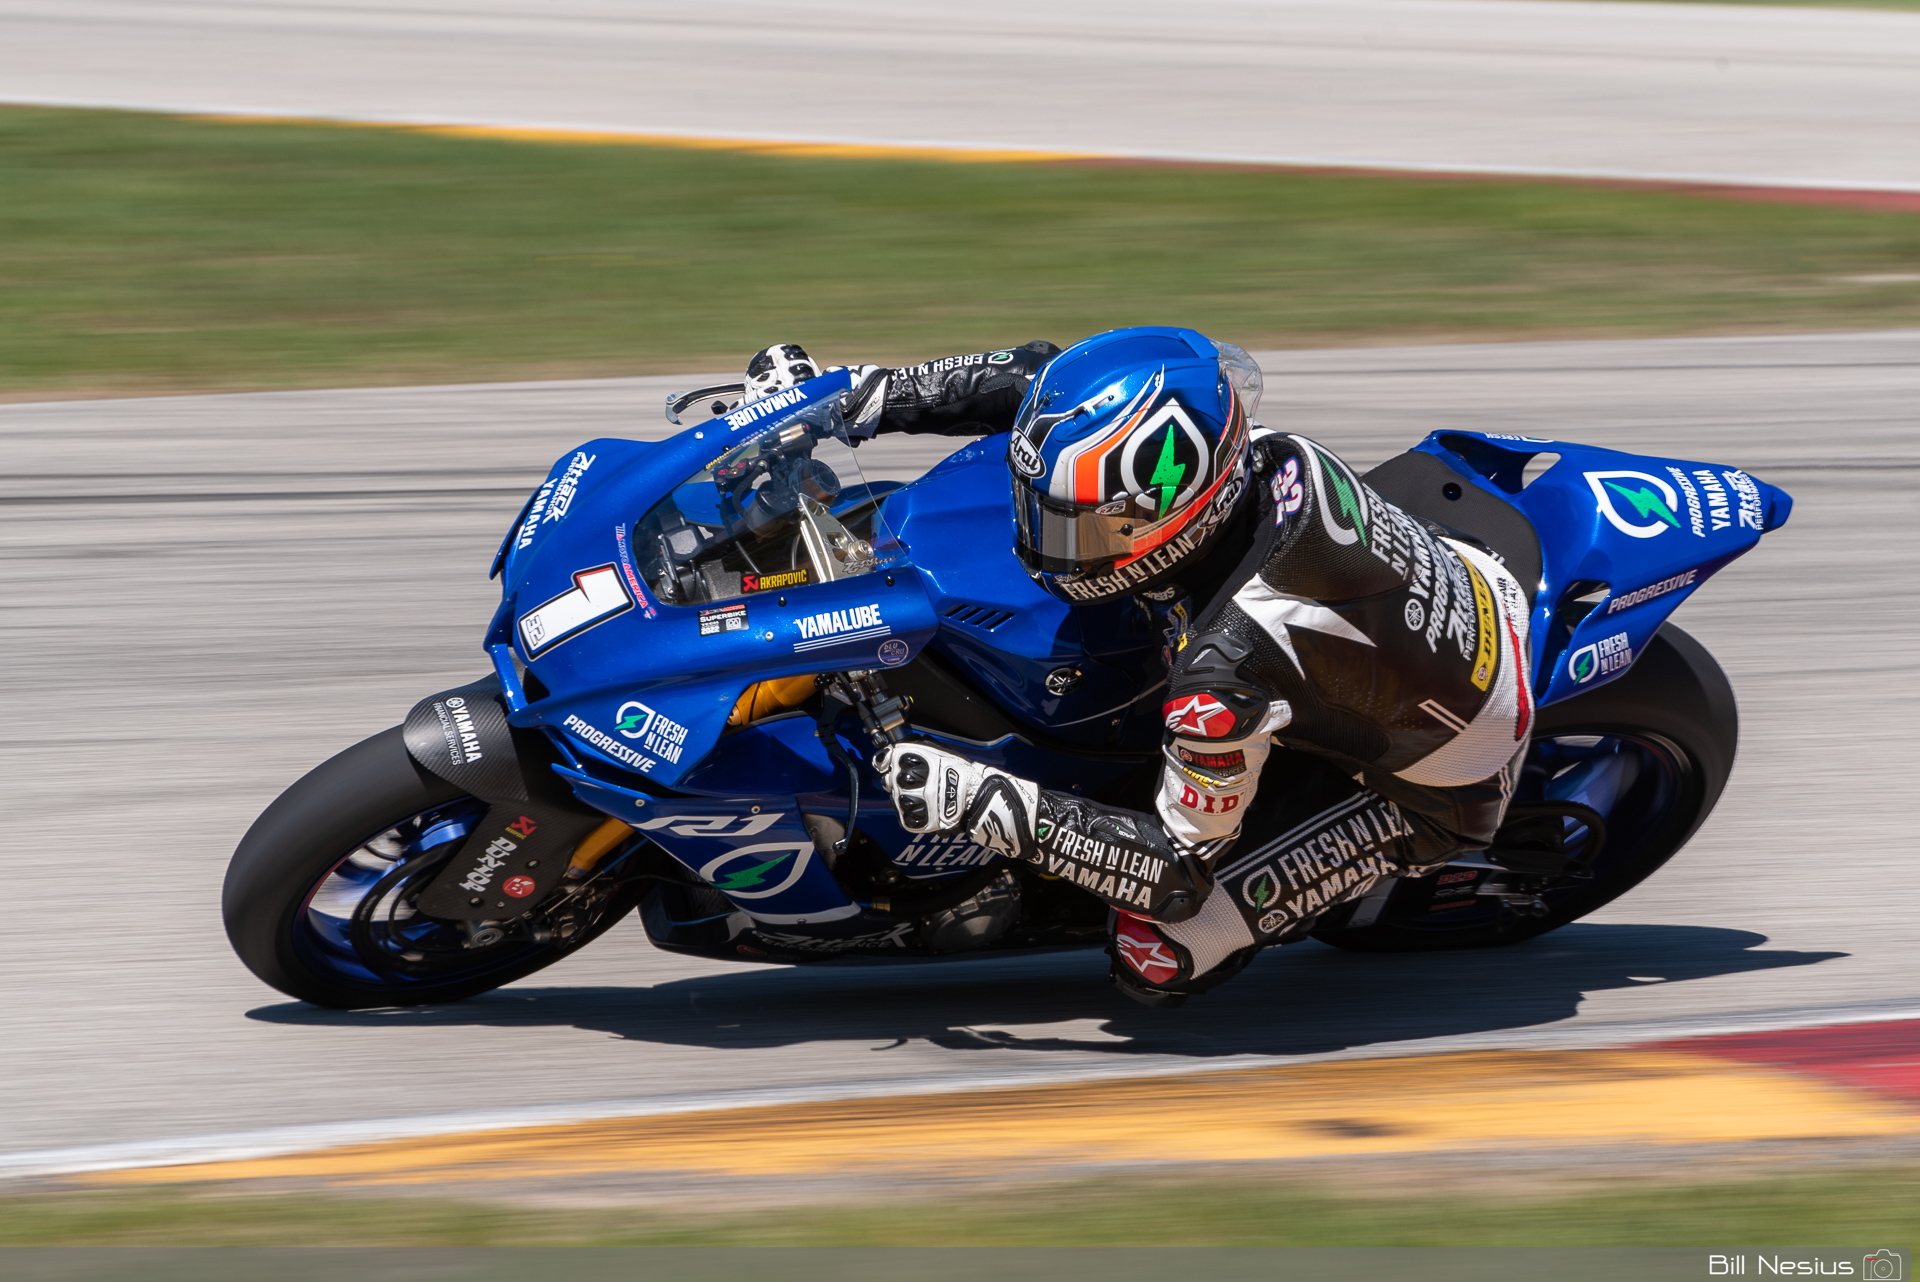 Jake Gagne on the Number 1 Fresh N Lean Progressive Yamaha Racing Yamaha YZF-R1 / IMG_4271 / 4